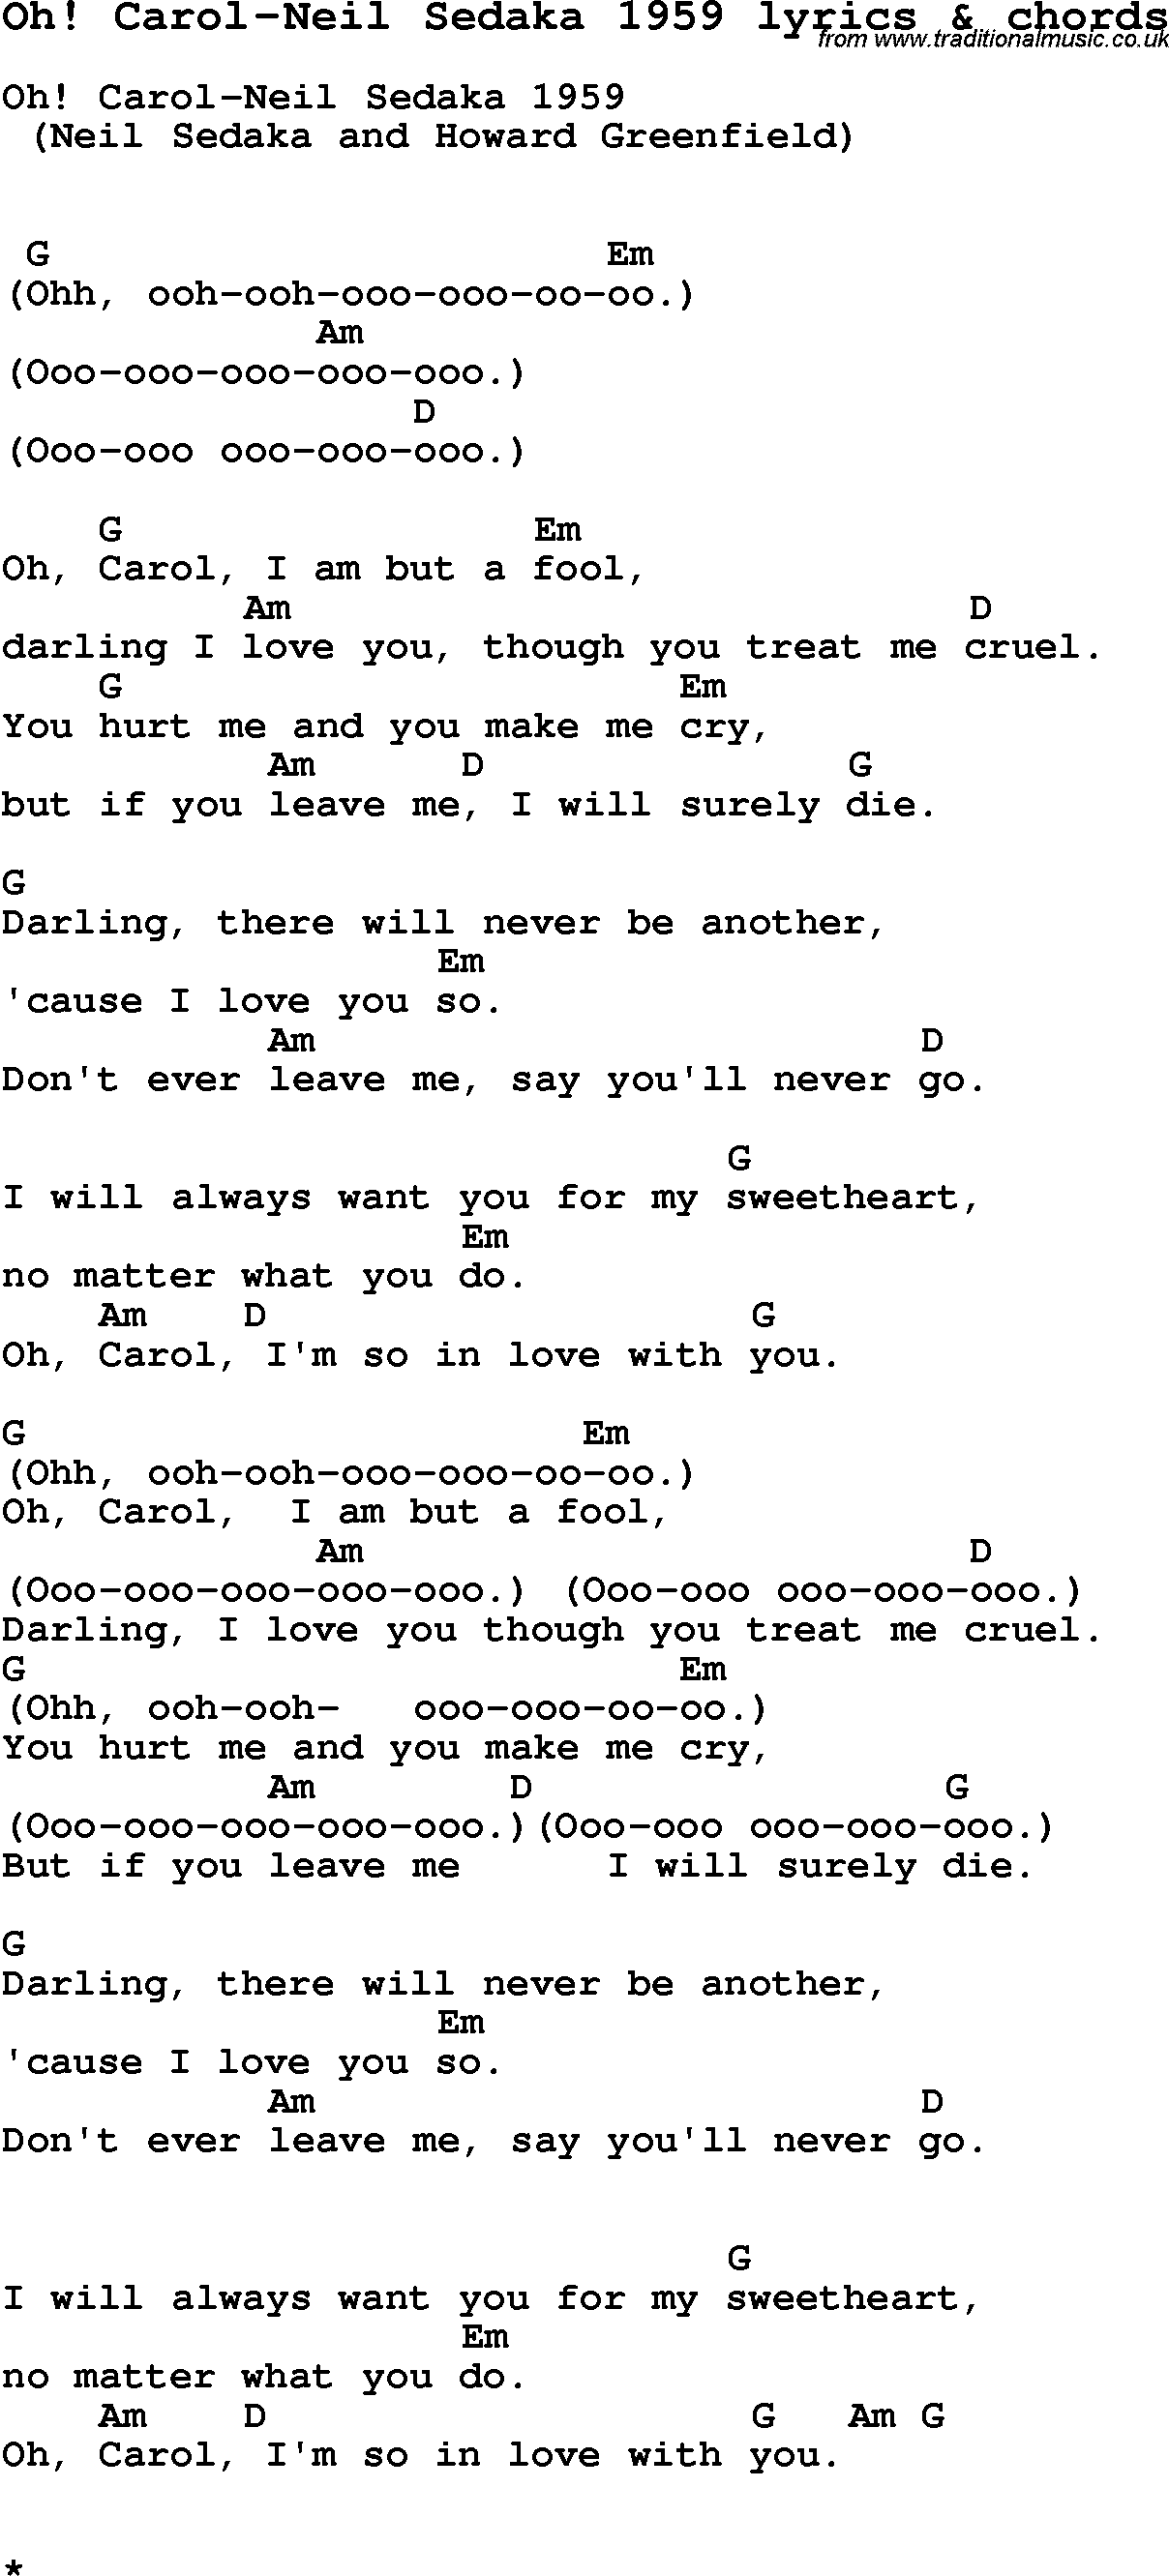 Love Song Lyrics for: Oh! Carol-Neil Sedaka 1959 with chords for Ukulele, Guitar Banjo etc.